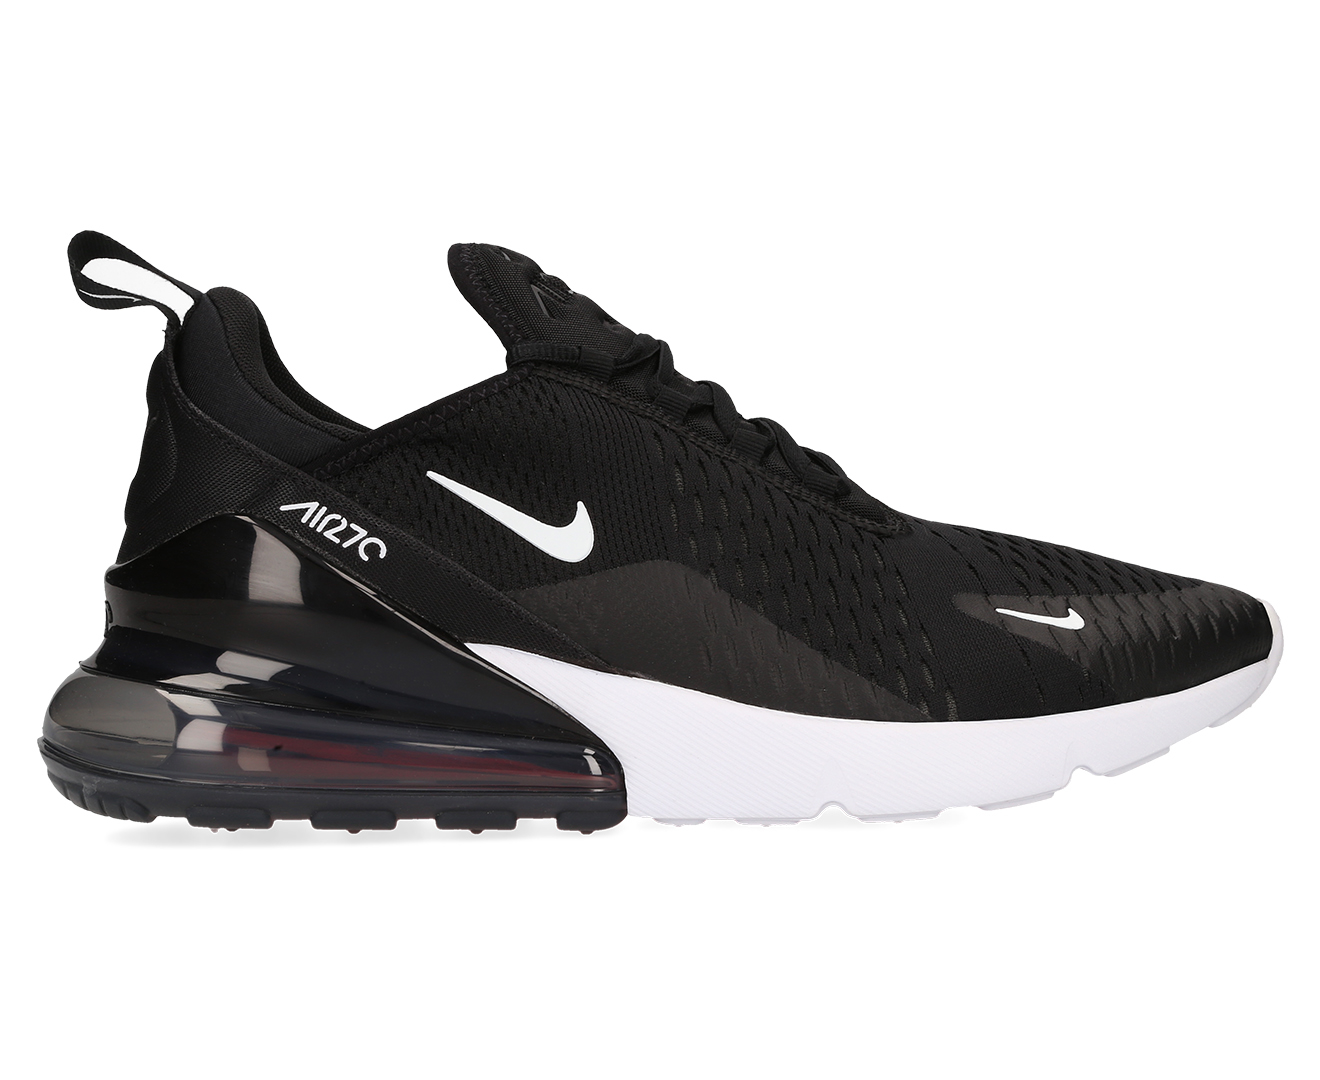 Nike Men's Air Max 270 Shoe - Black/Anthracite-White | Catch.com.au